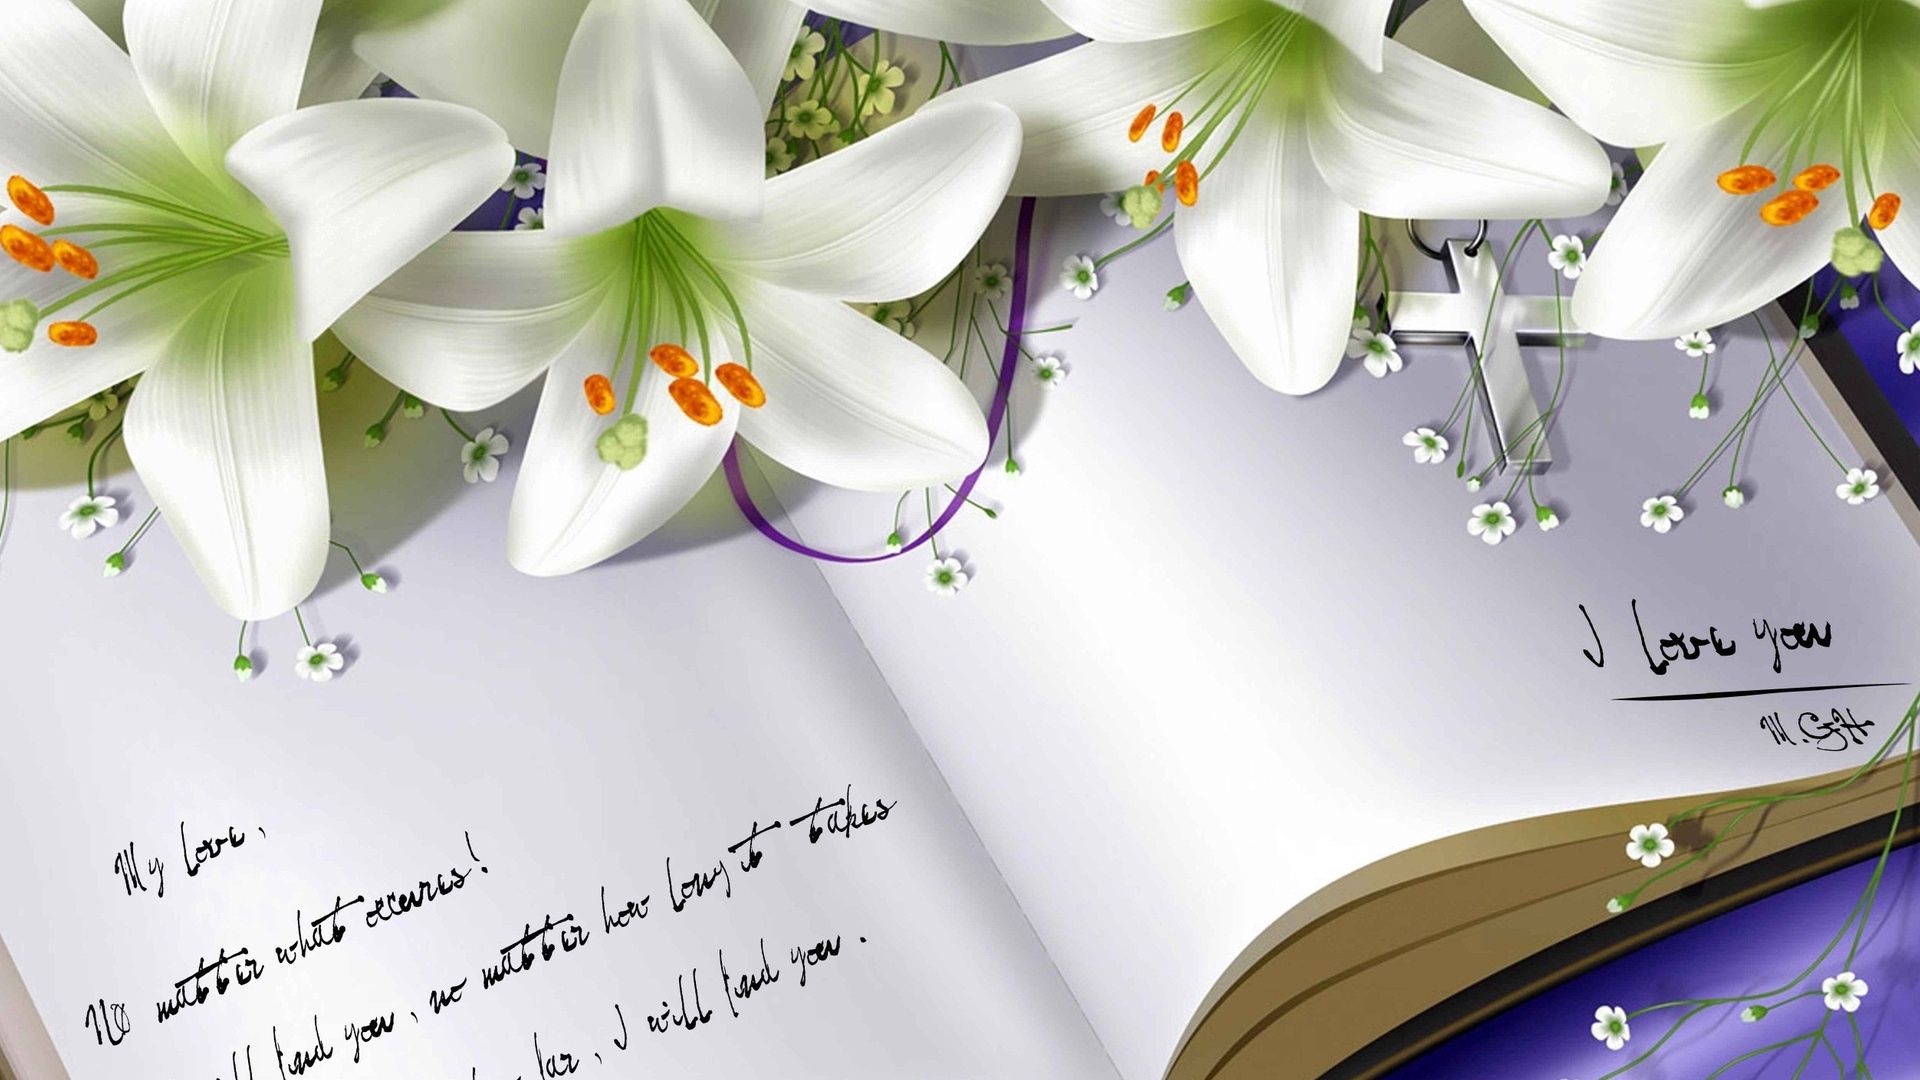 Download wallpaper 1920x1080 book, notebook, flowers, lilies full hd, hdtv,  fhd, 1080p hd background